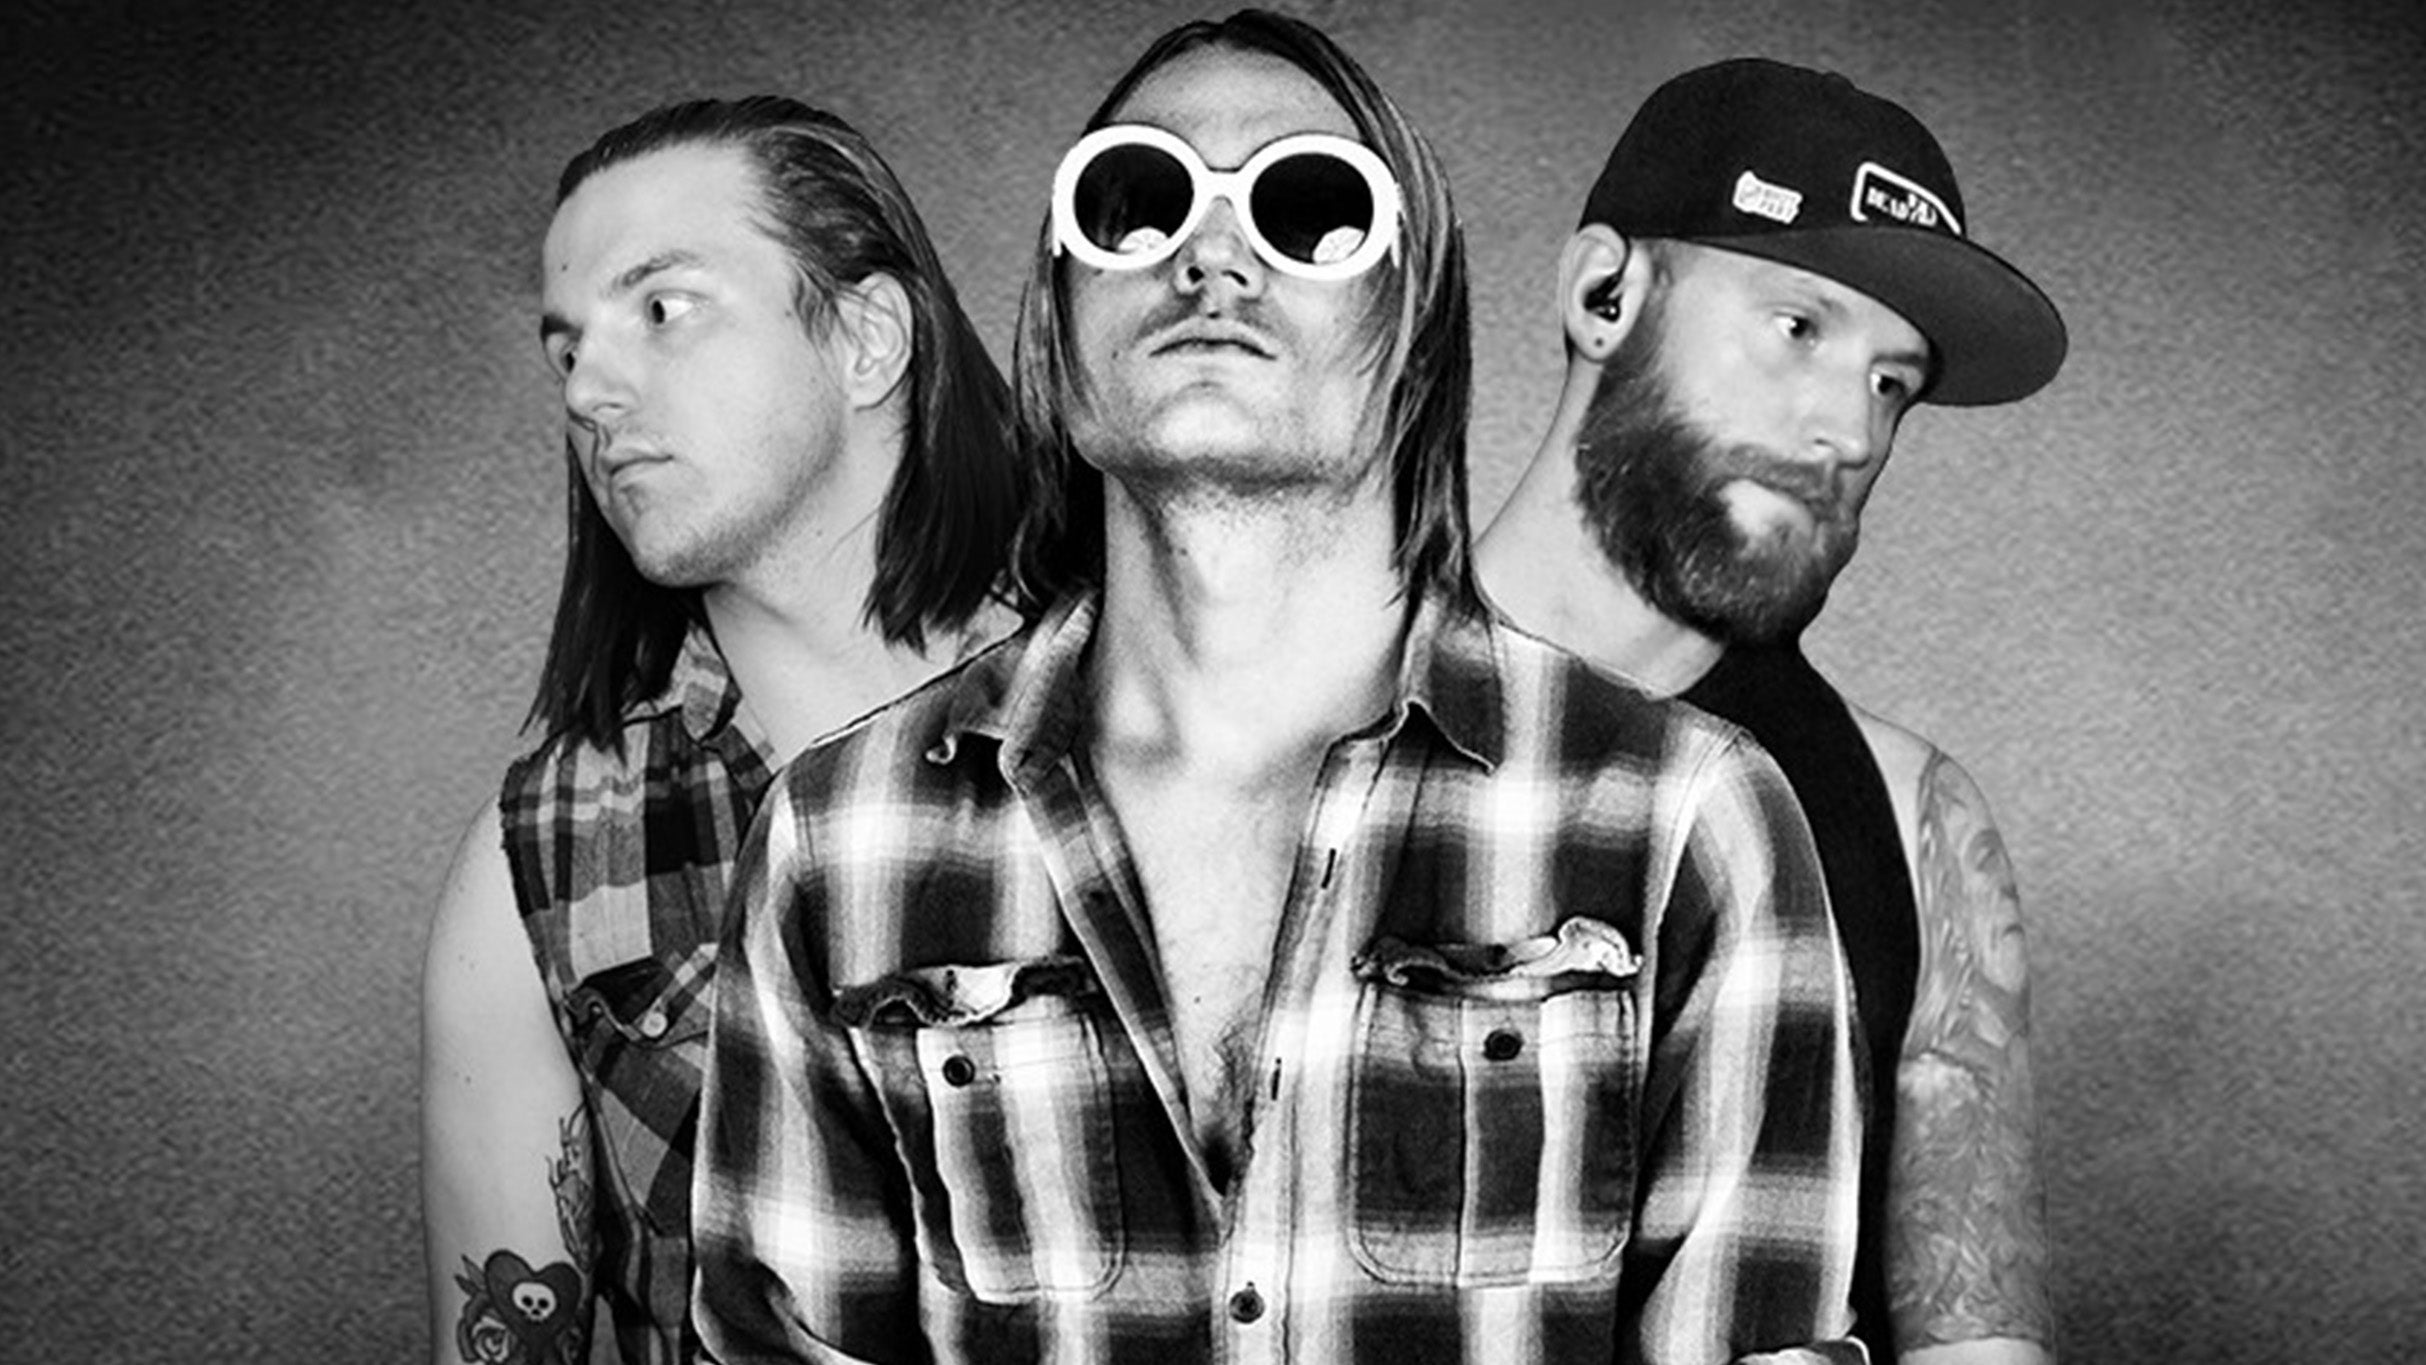 Grunge Night feat. Smells Like Nirvana, Grunge DNA, and Dead Original in Cleveland promo photo for Live Nation presale offer code